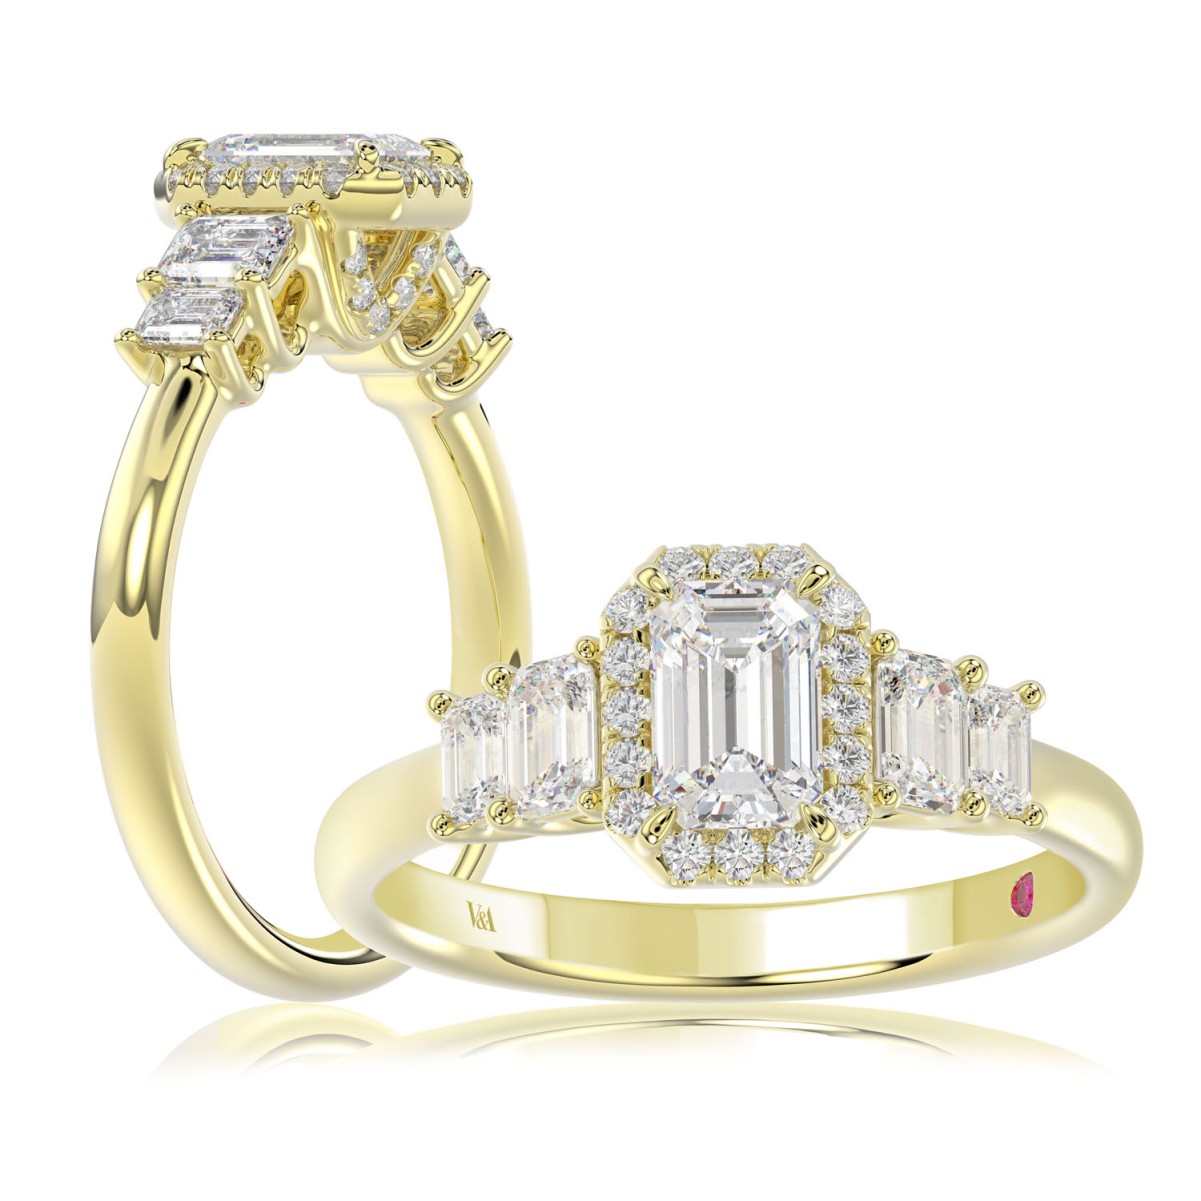 14K YELLOW GOLD 1 1/2CT ROUND/EMERALD DIAMOND LADIES RING(CENTER STONE EMERALD DIAMOND 3/4 CT)